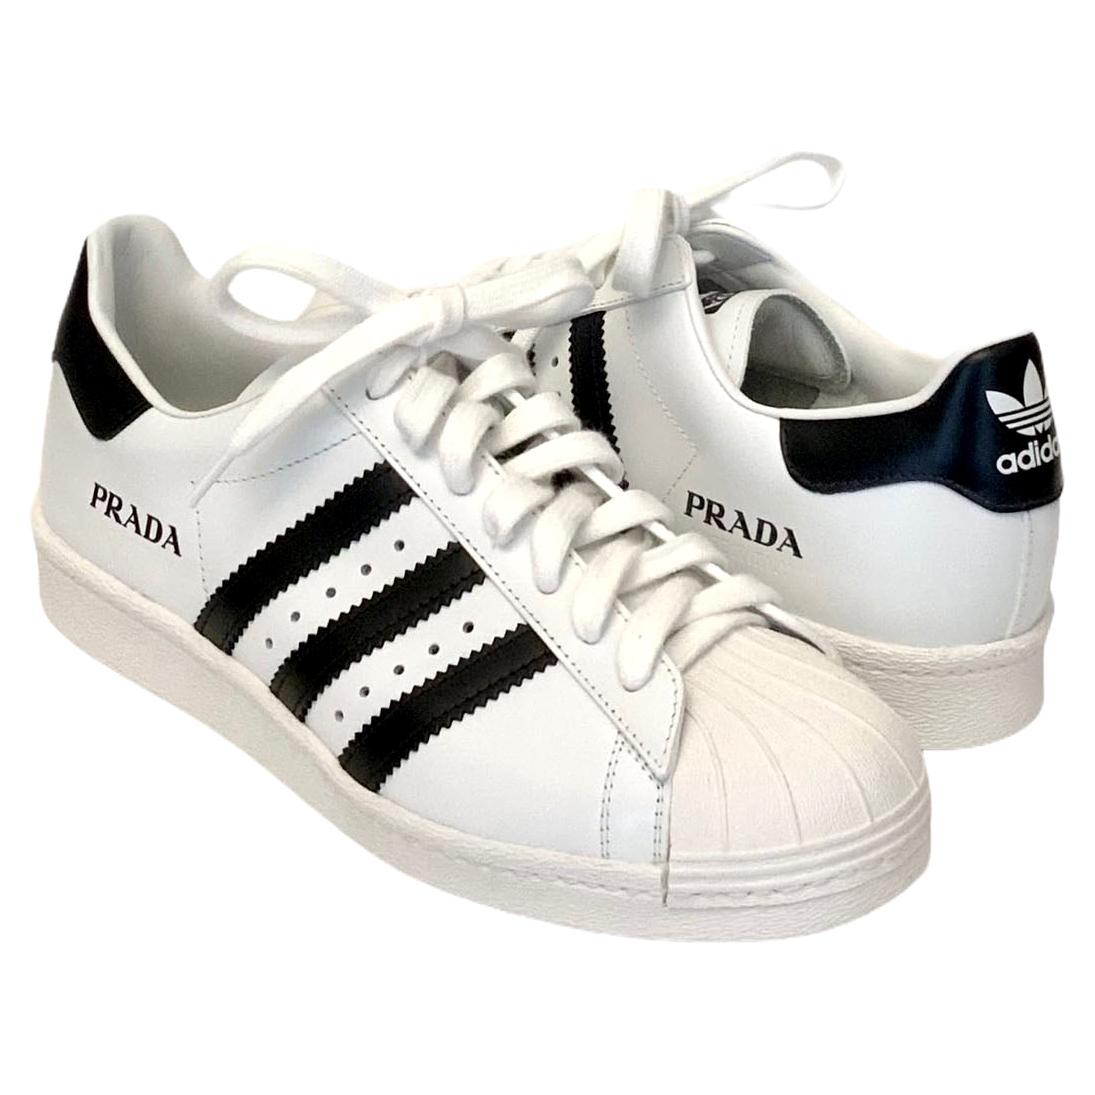 Prada White and Black Adidas Superstar Sneakers